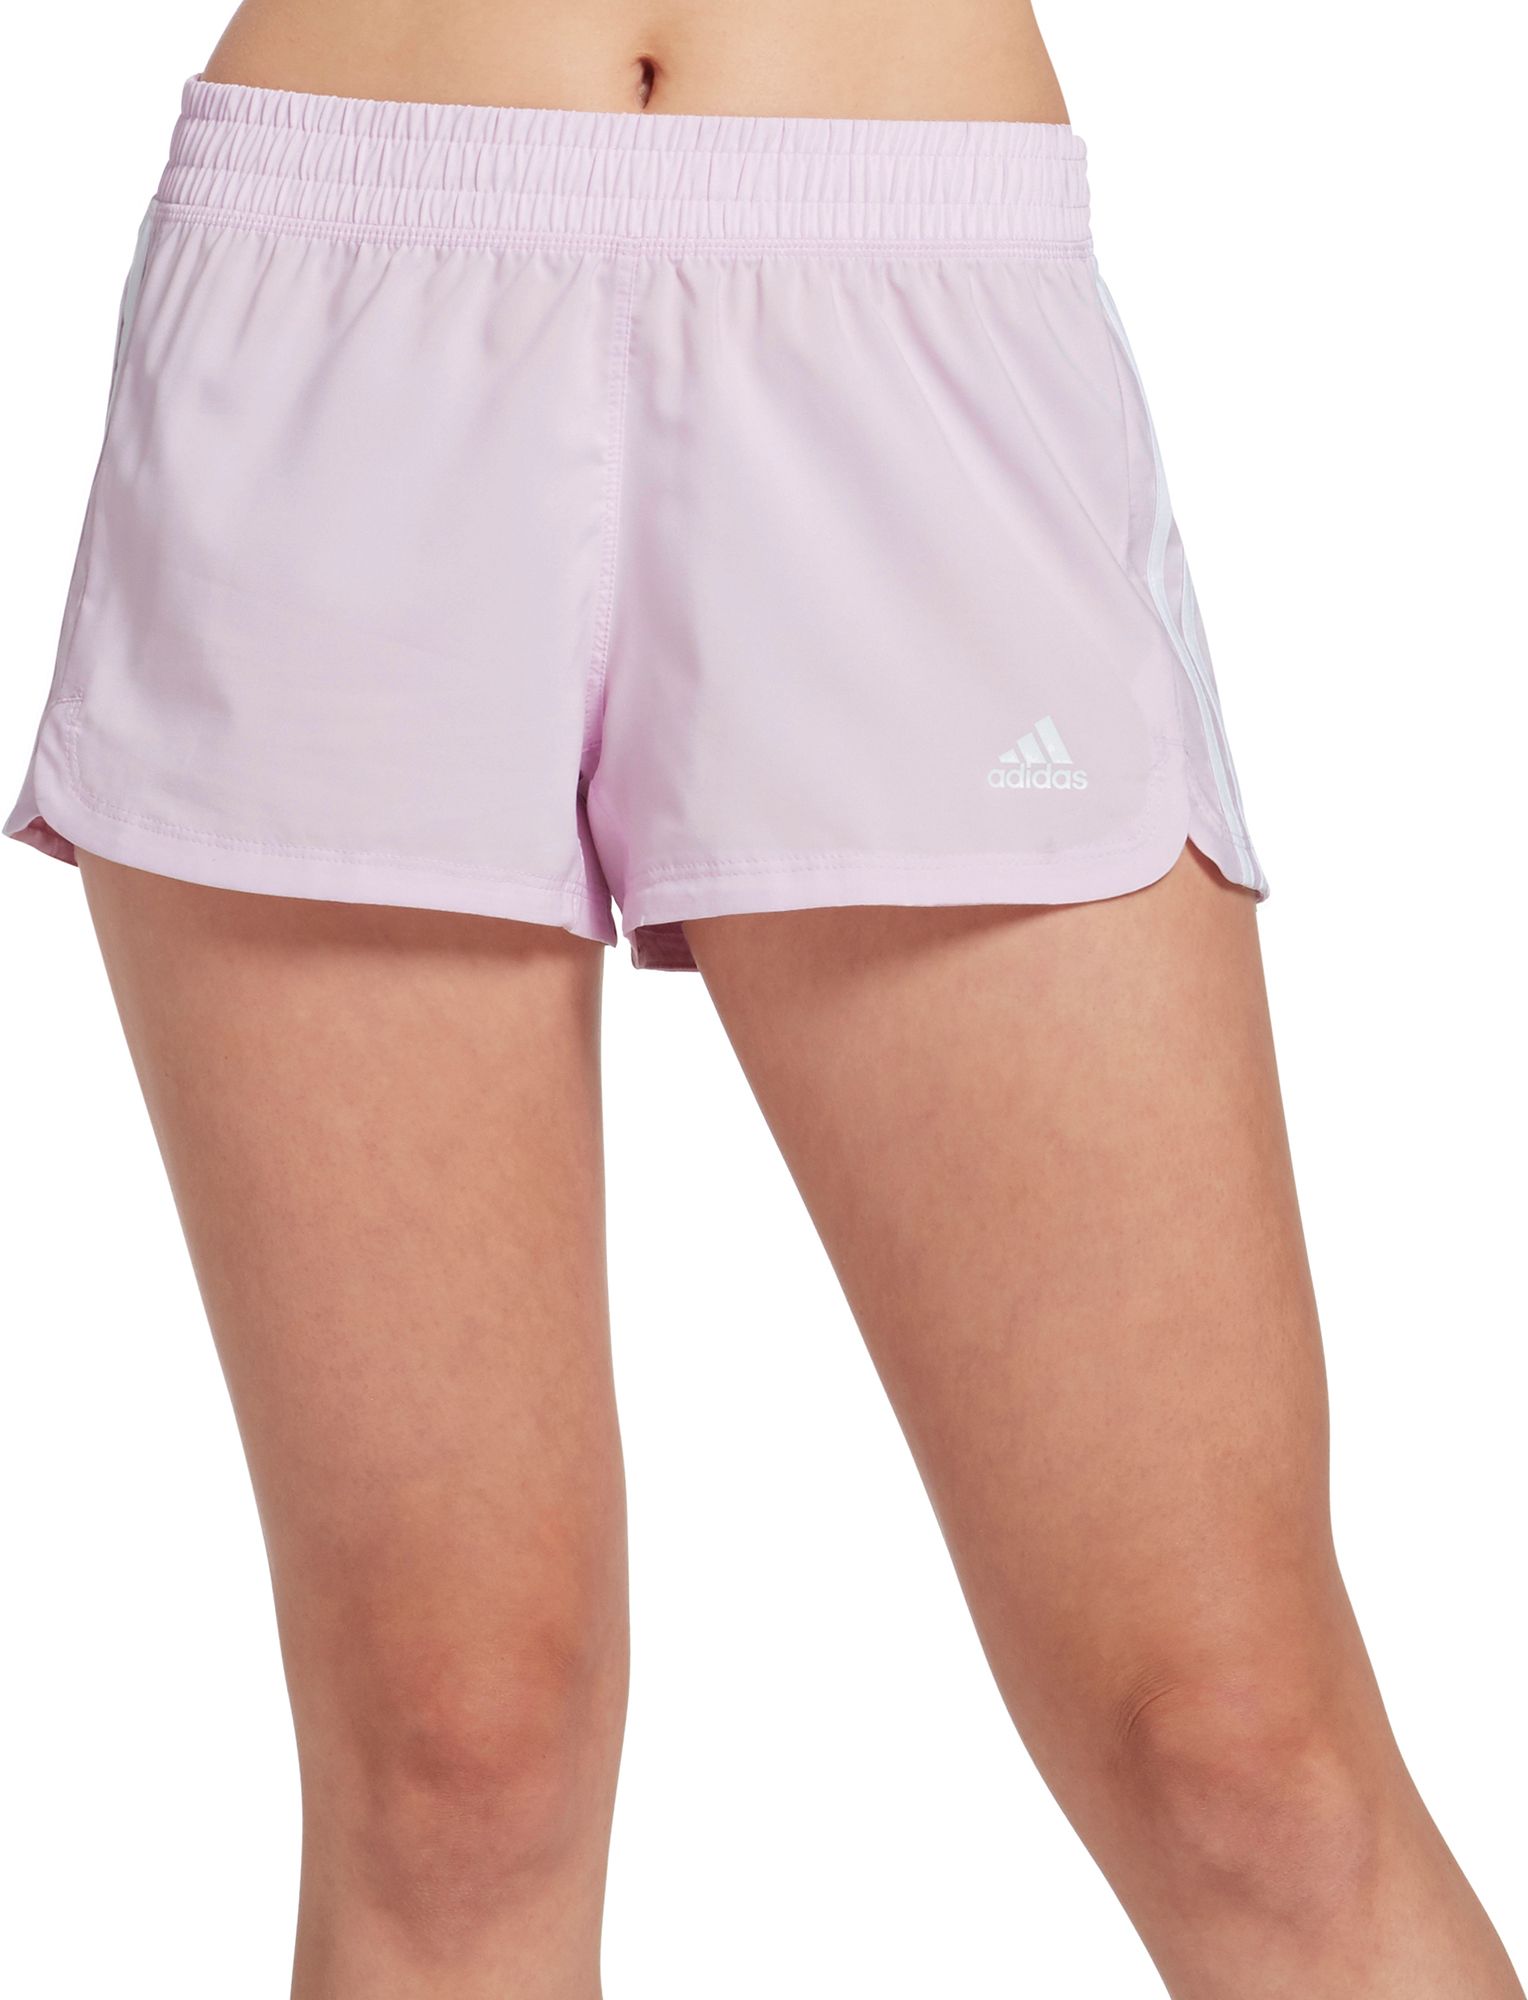 adidas three stripe shorts pink